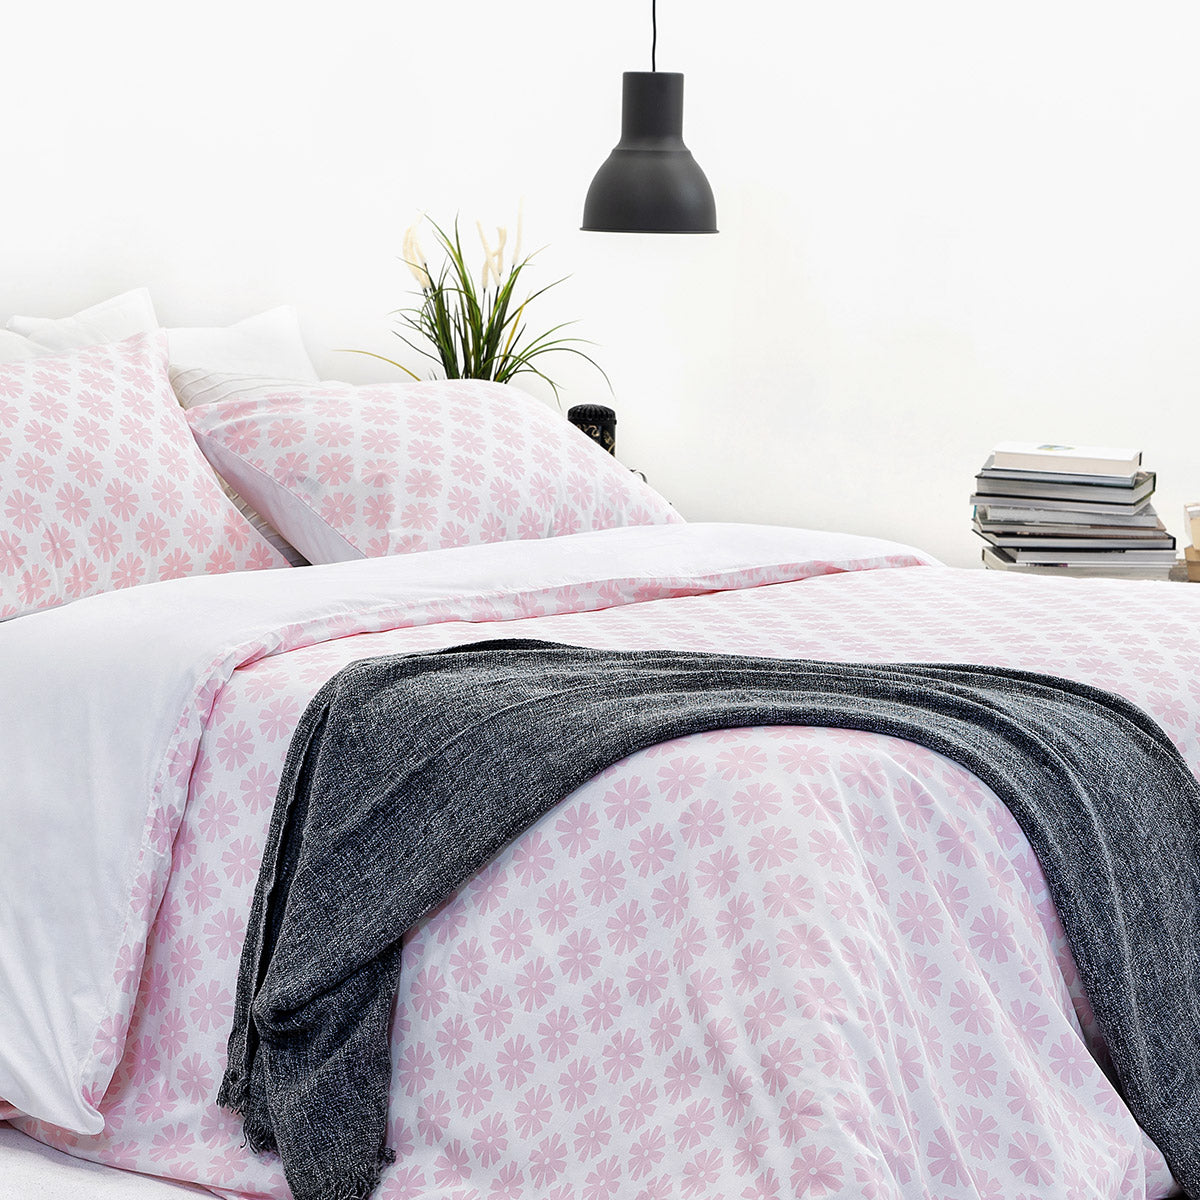 Leisure Pink Floral Cotton Duvet Cover Bedding Set - Super King Size